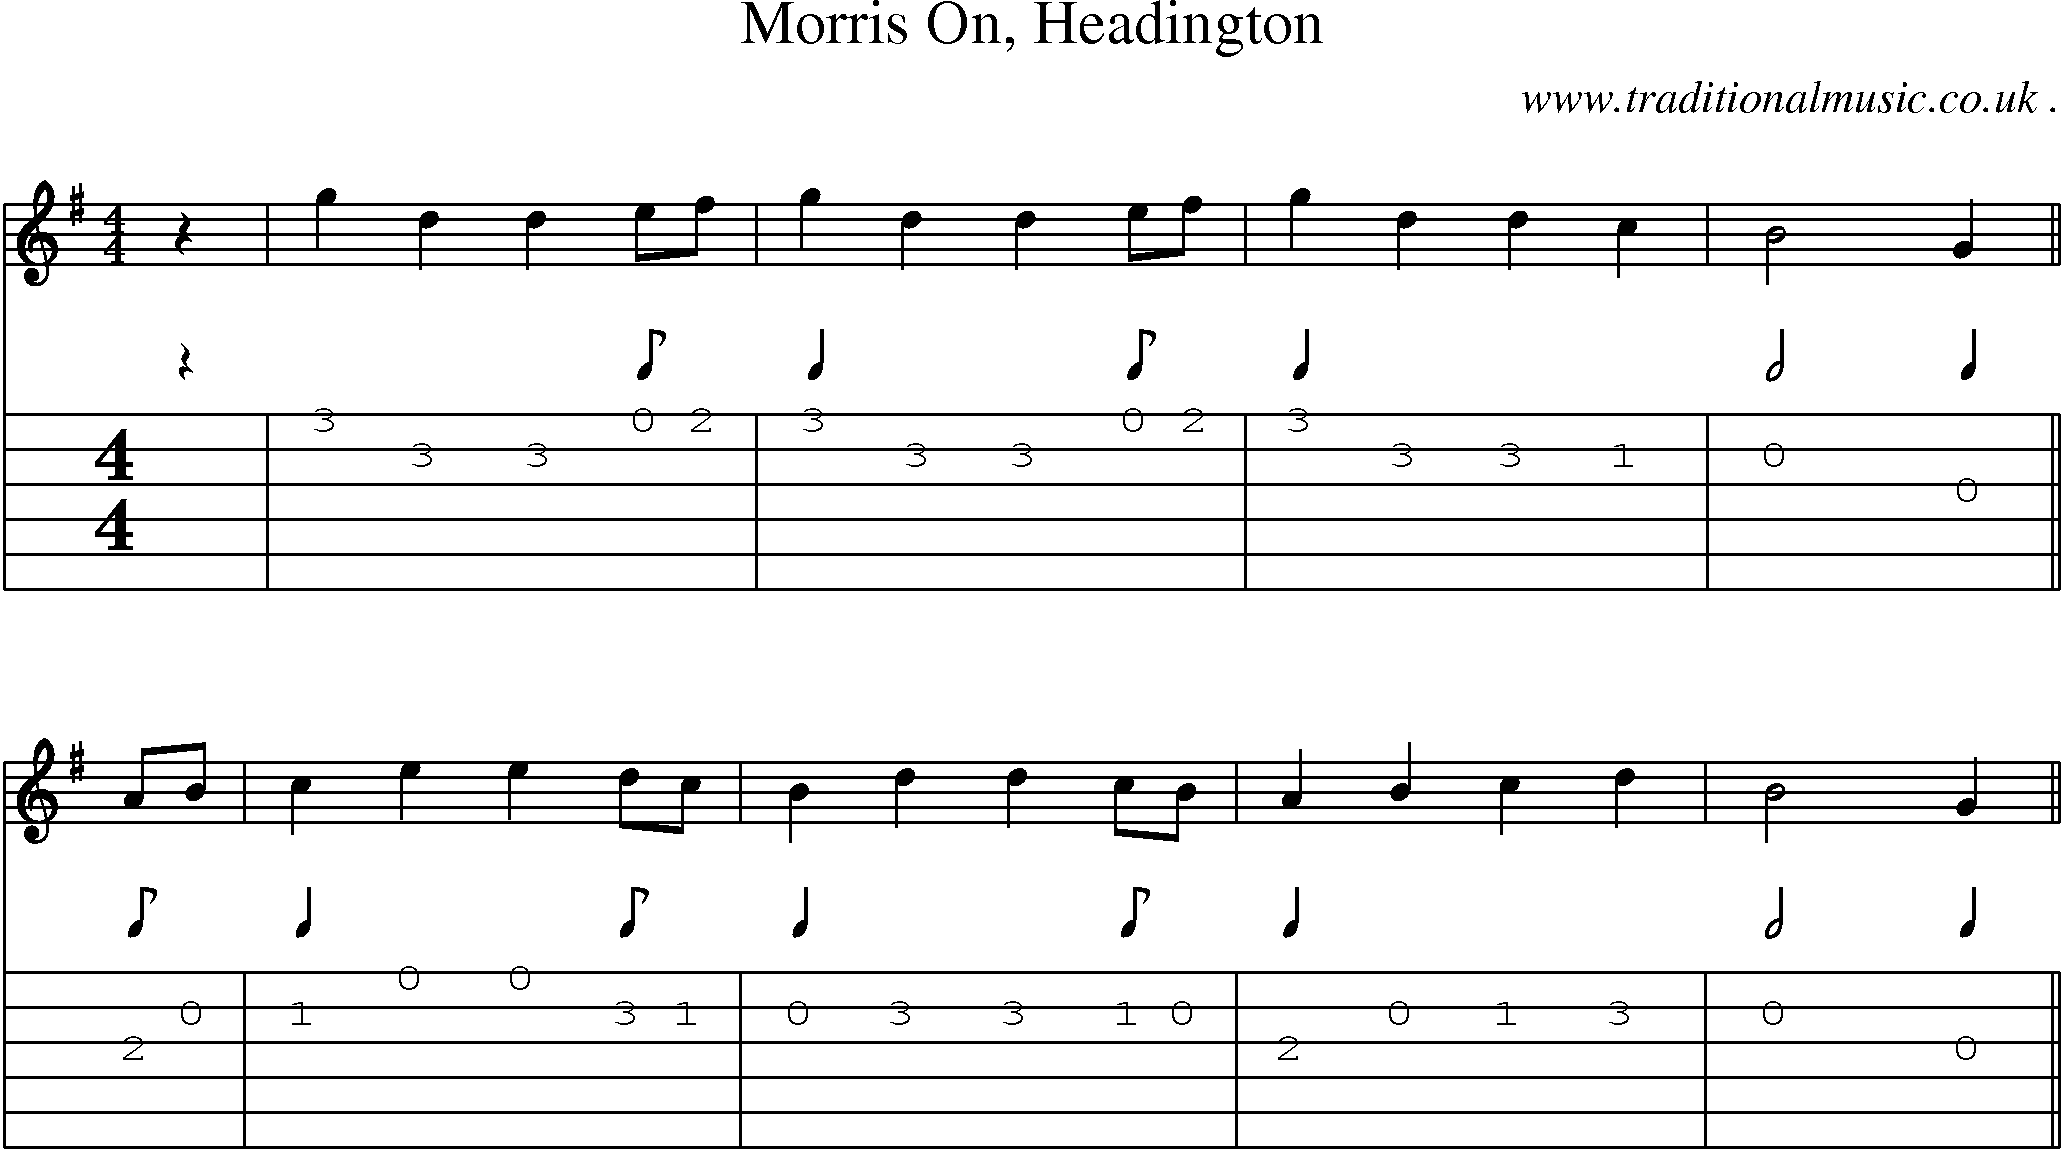 Sheet-Music and Guitar Tabs for Morris On Headington